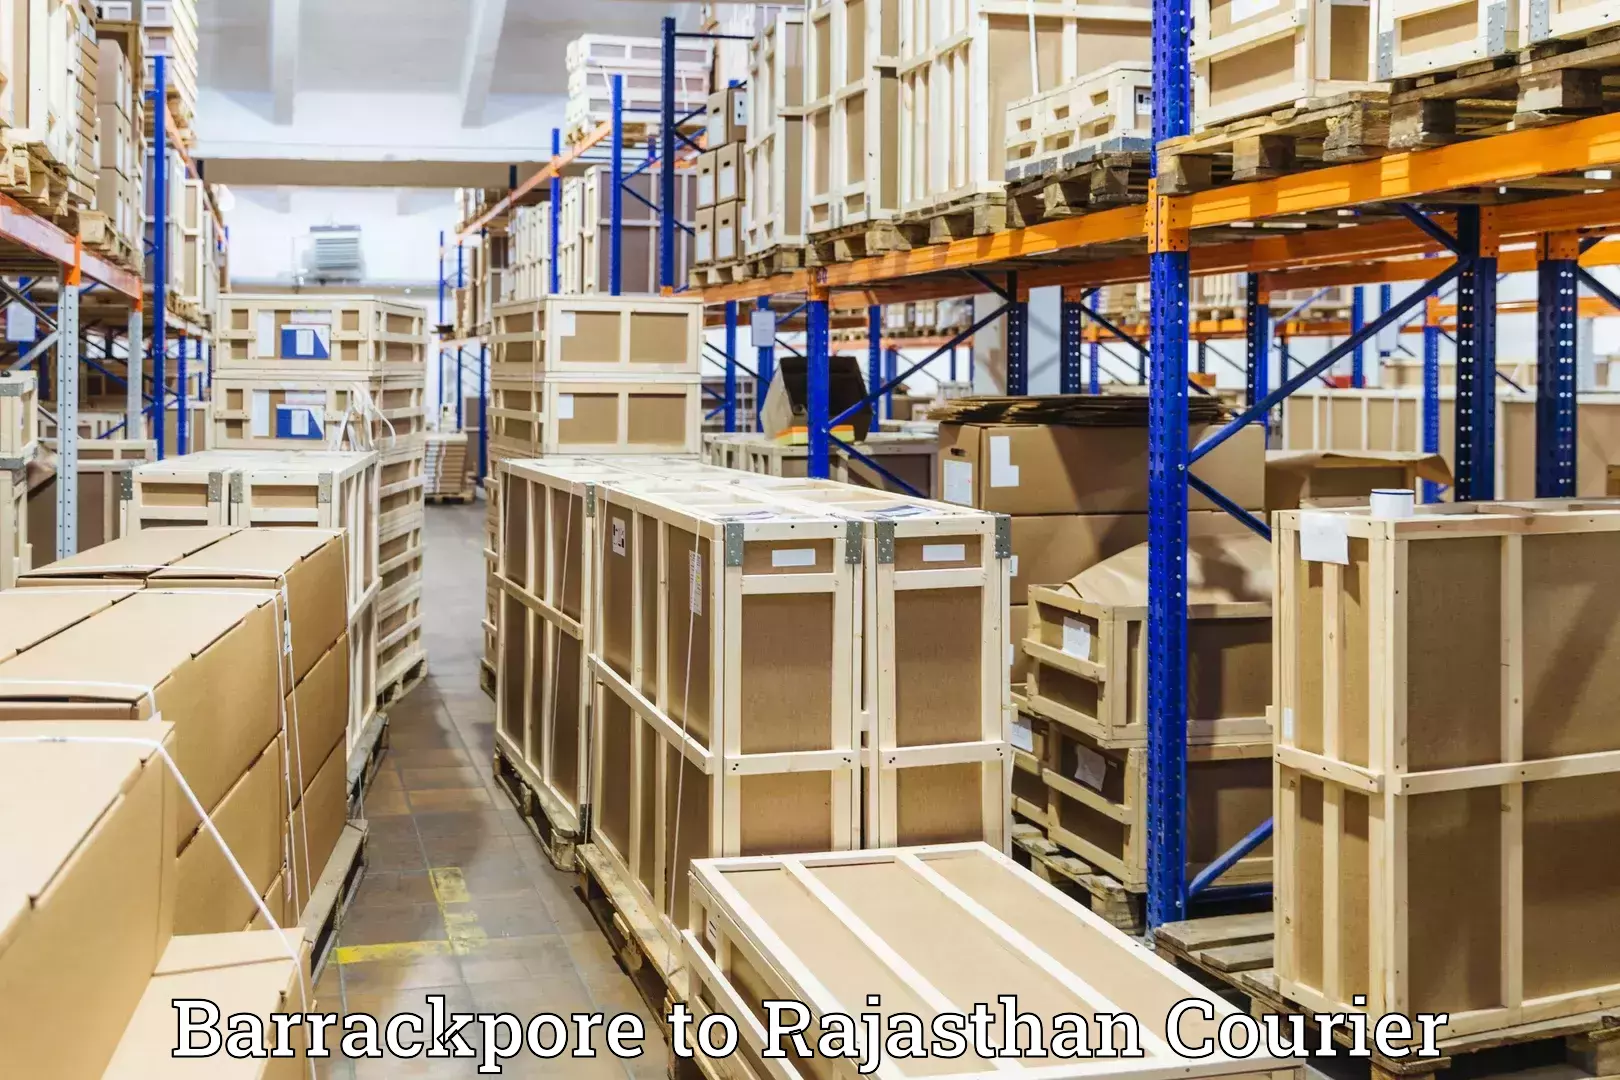 Luggage shipment specialists Barrackpore to Sri Vijaynagar